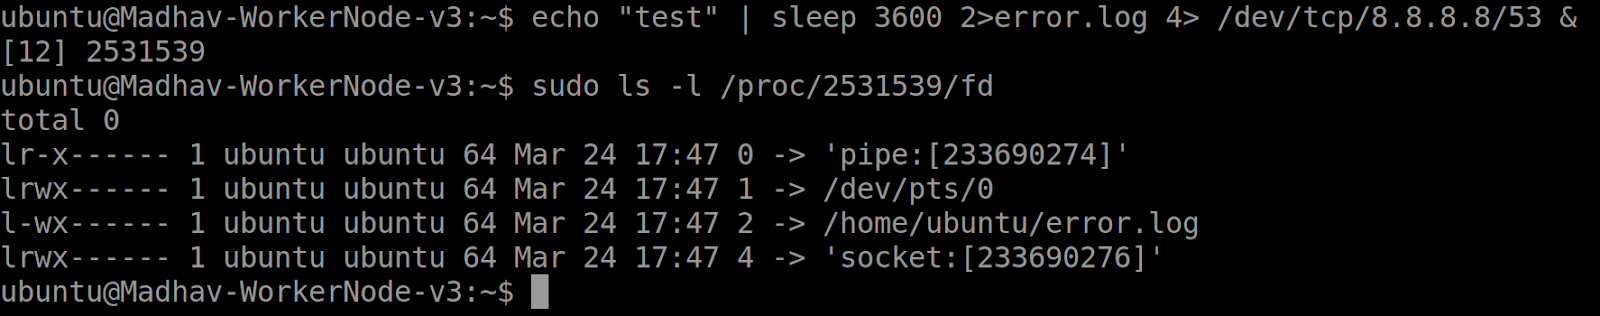 Screenshot of Linux terminal depicting command echo “test” | sleep 3600 2>error.log 4> /dev/tcp/8.8.8.8/53 &